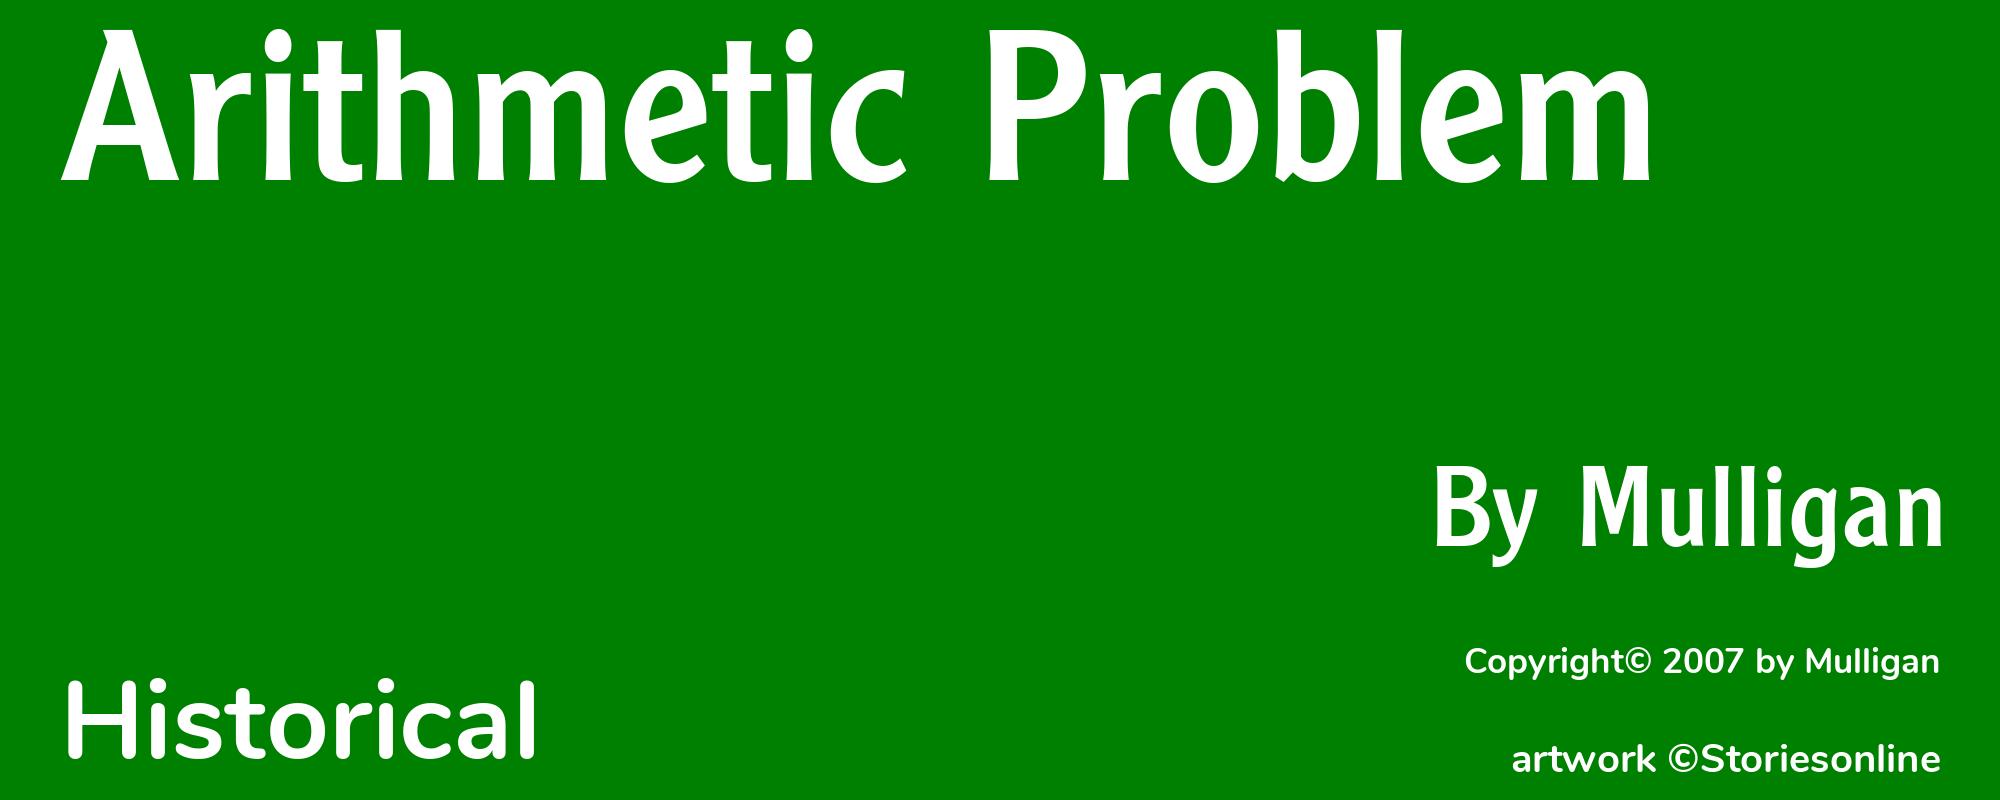 Arithmetic Problem - Cover